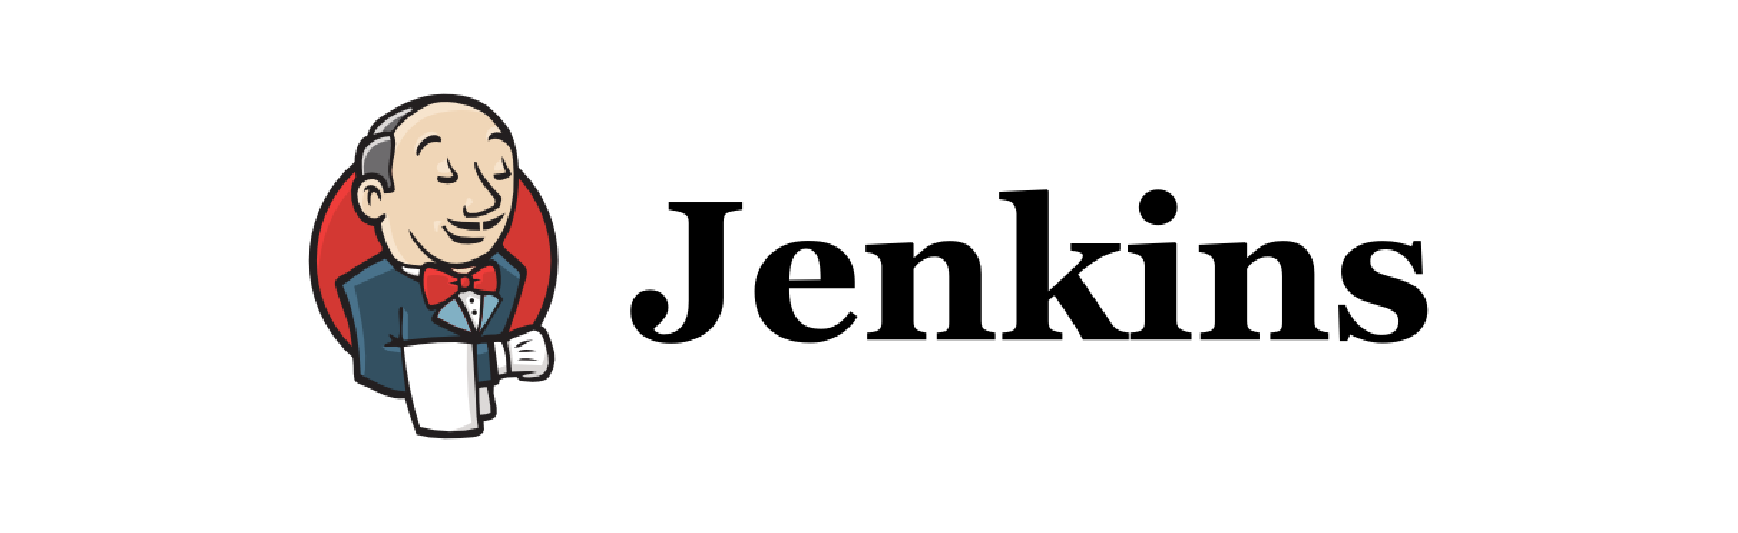 jenkins (1).png